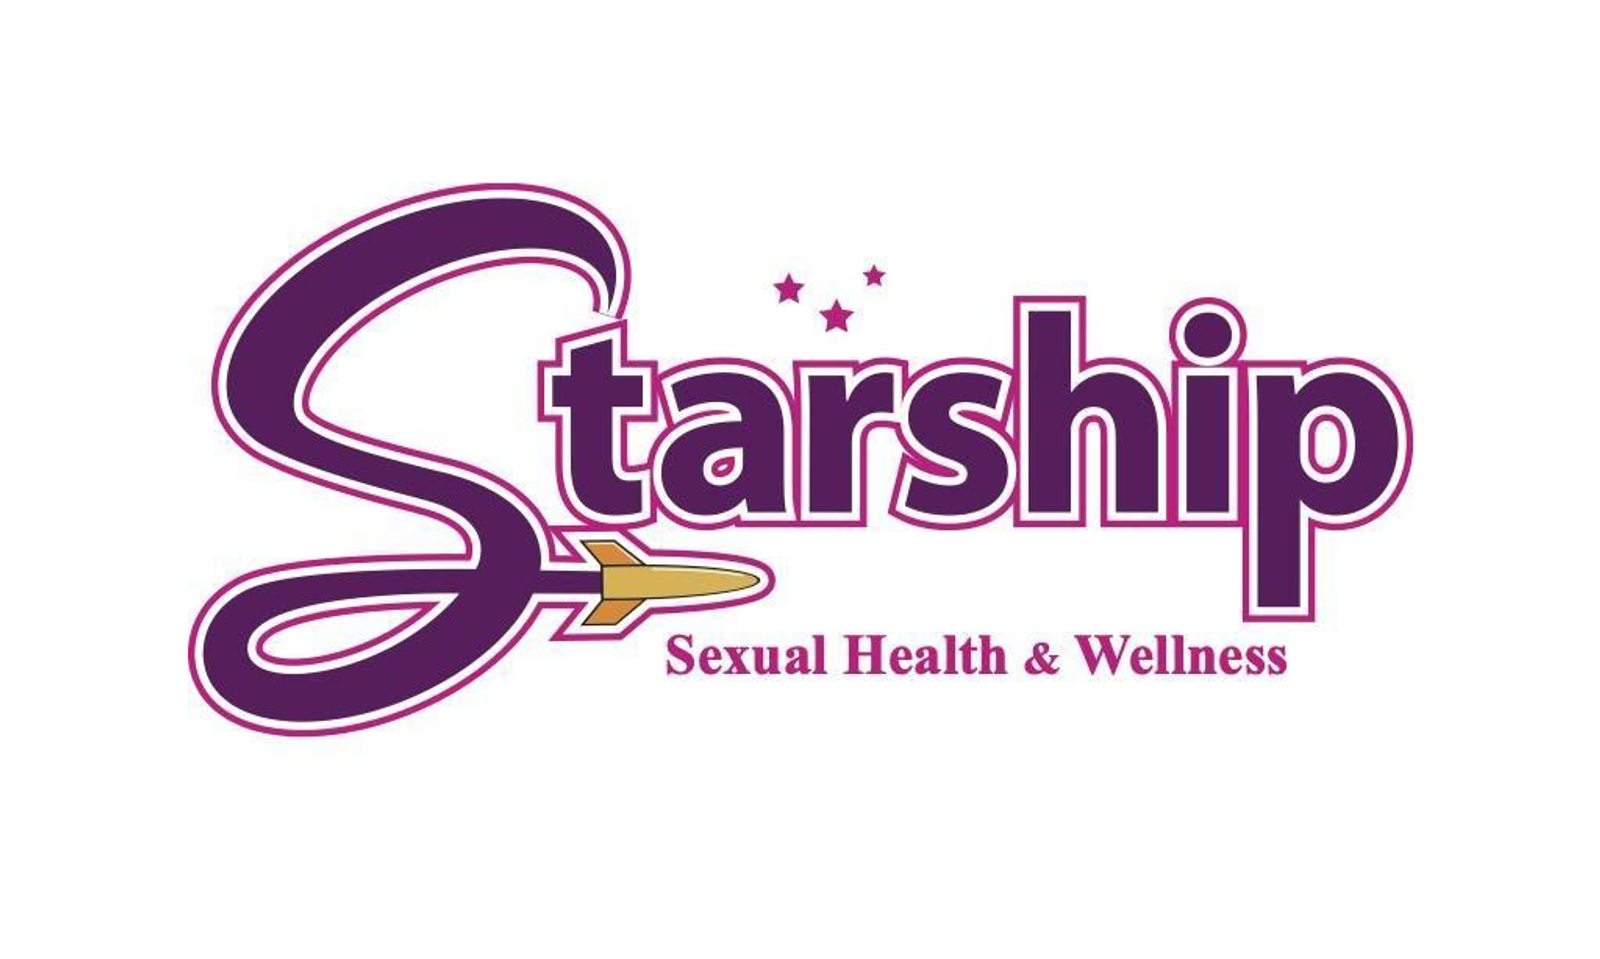 Starship Enterprises of Atlanta Launches Model Affiliate Program